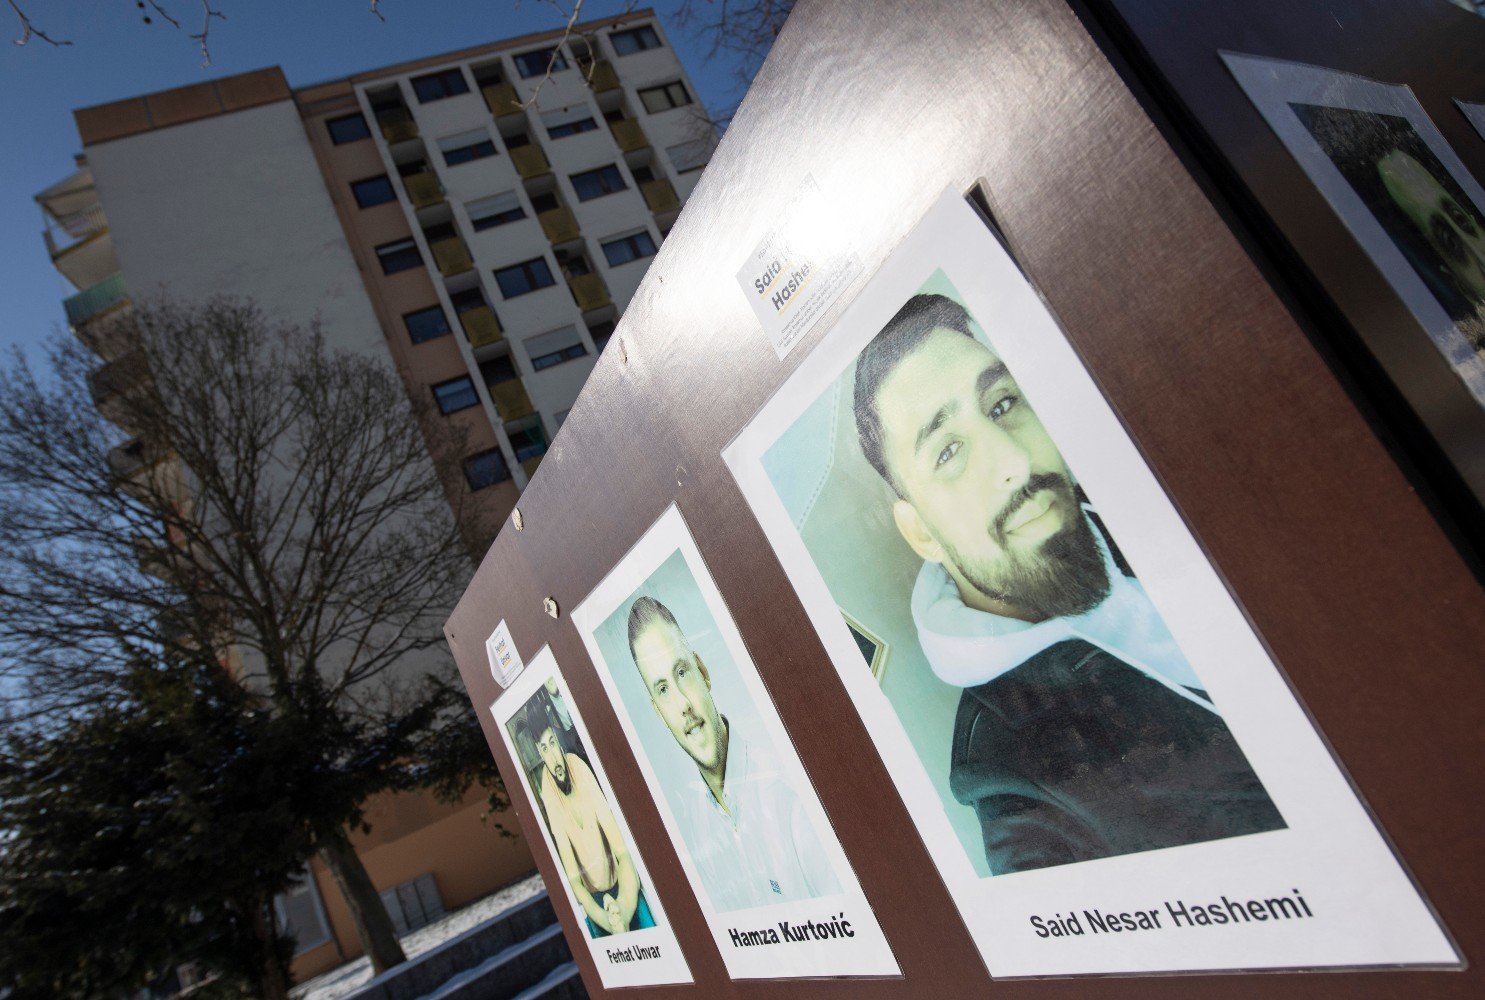 Berlin launches task force against anti-Muslim racism on anniversary of Hanau attacks